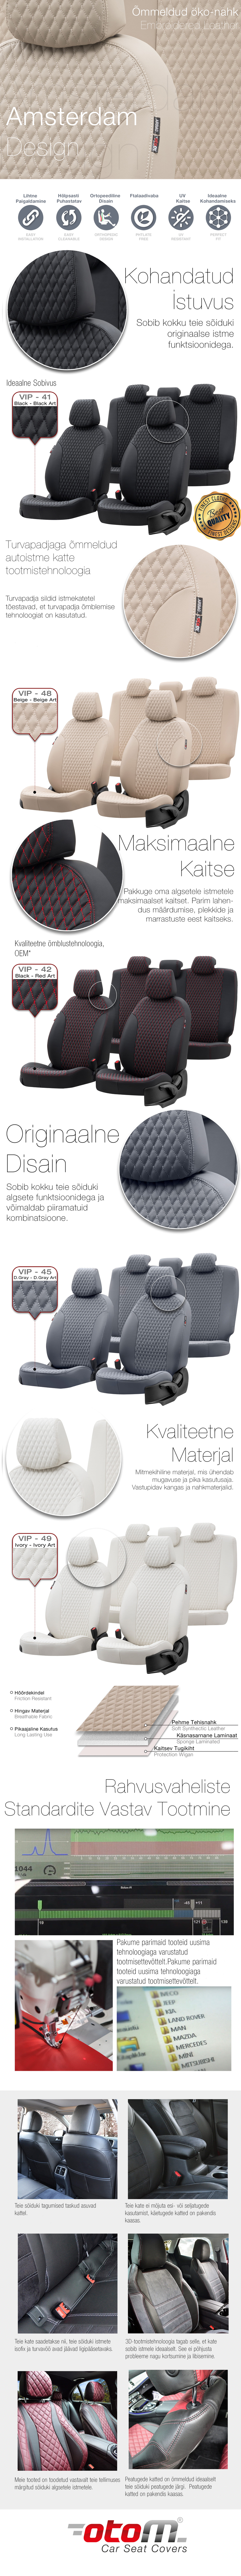 Amsterdam design seat covers